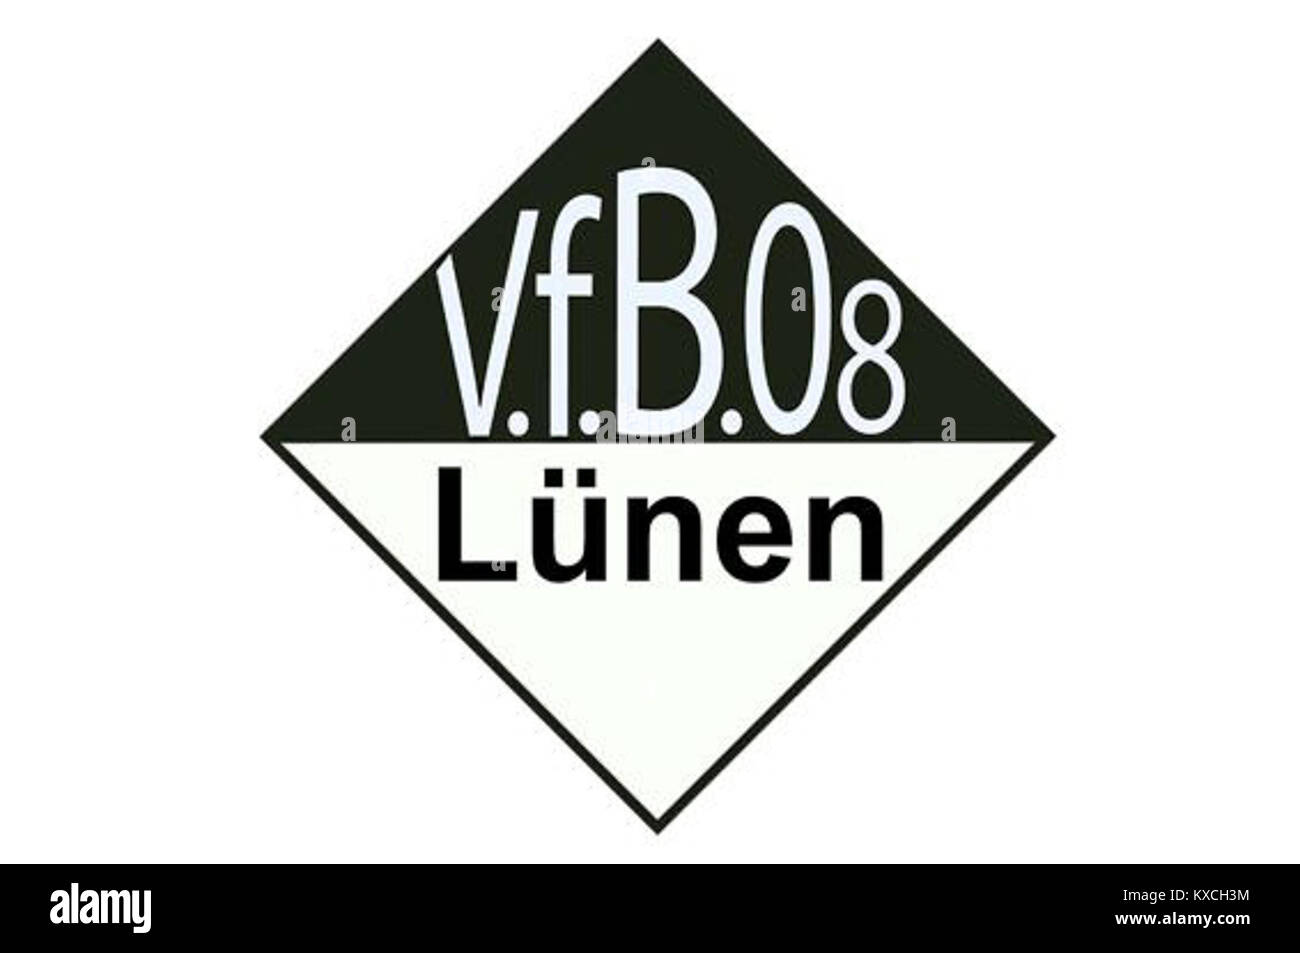 VfB 08 Lünen Foto Stock